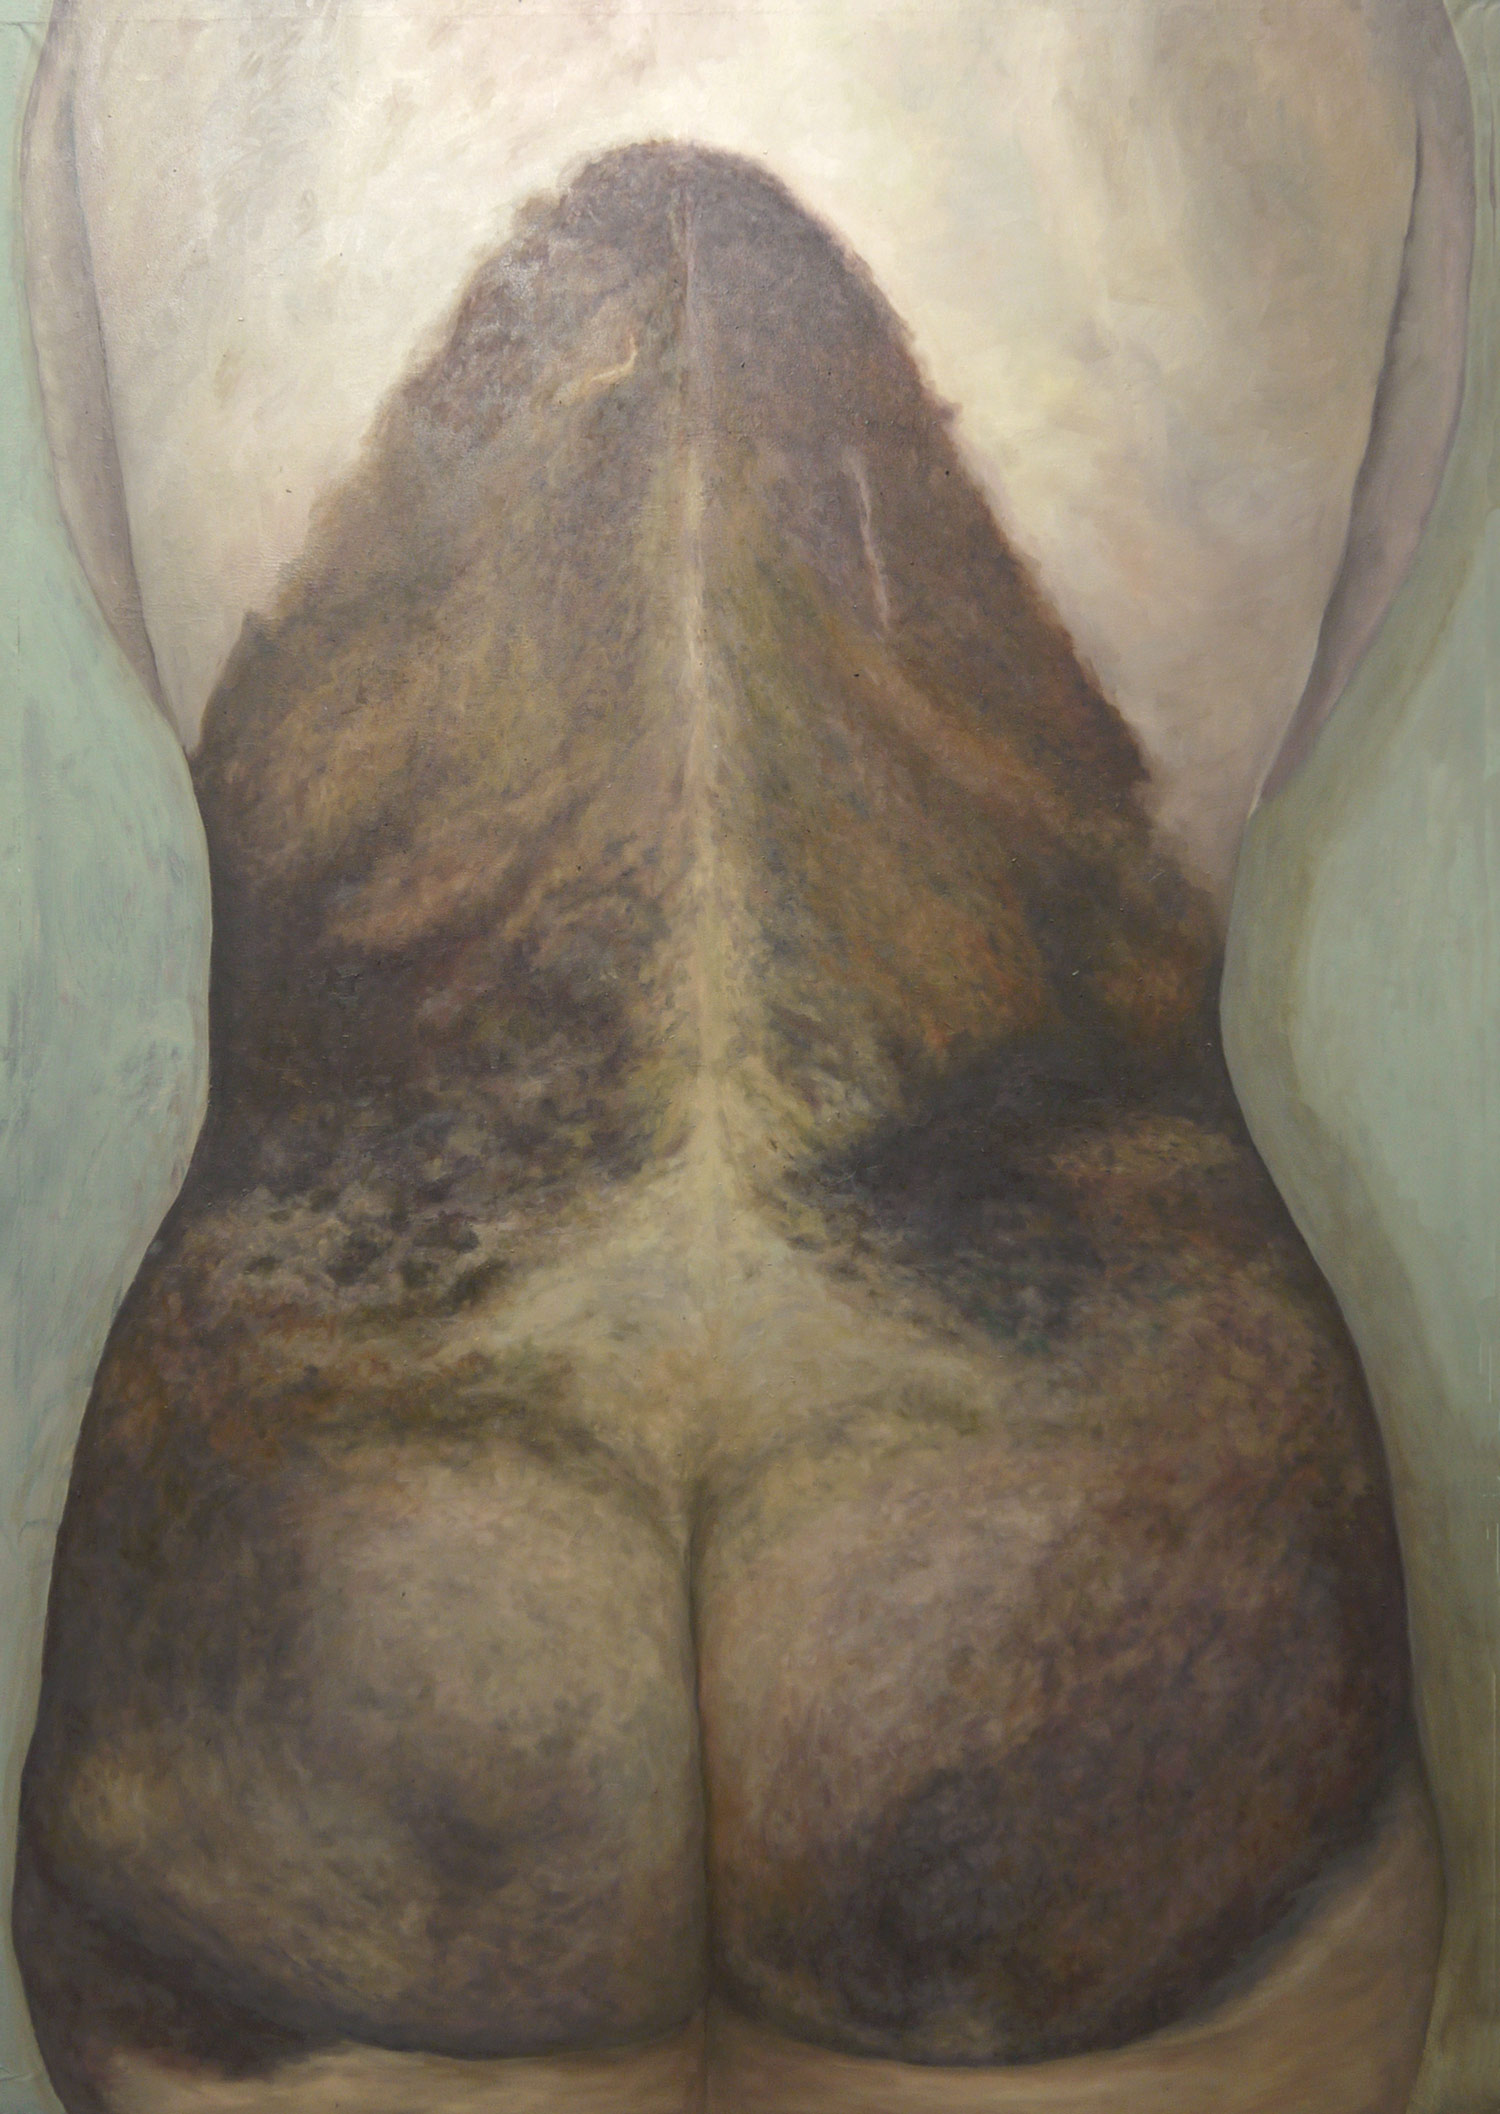 Laura Link . Neavus Flammerus Gigantus 3 . 2014 . Öl auf Leinwand . 170 x 120